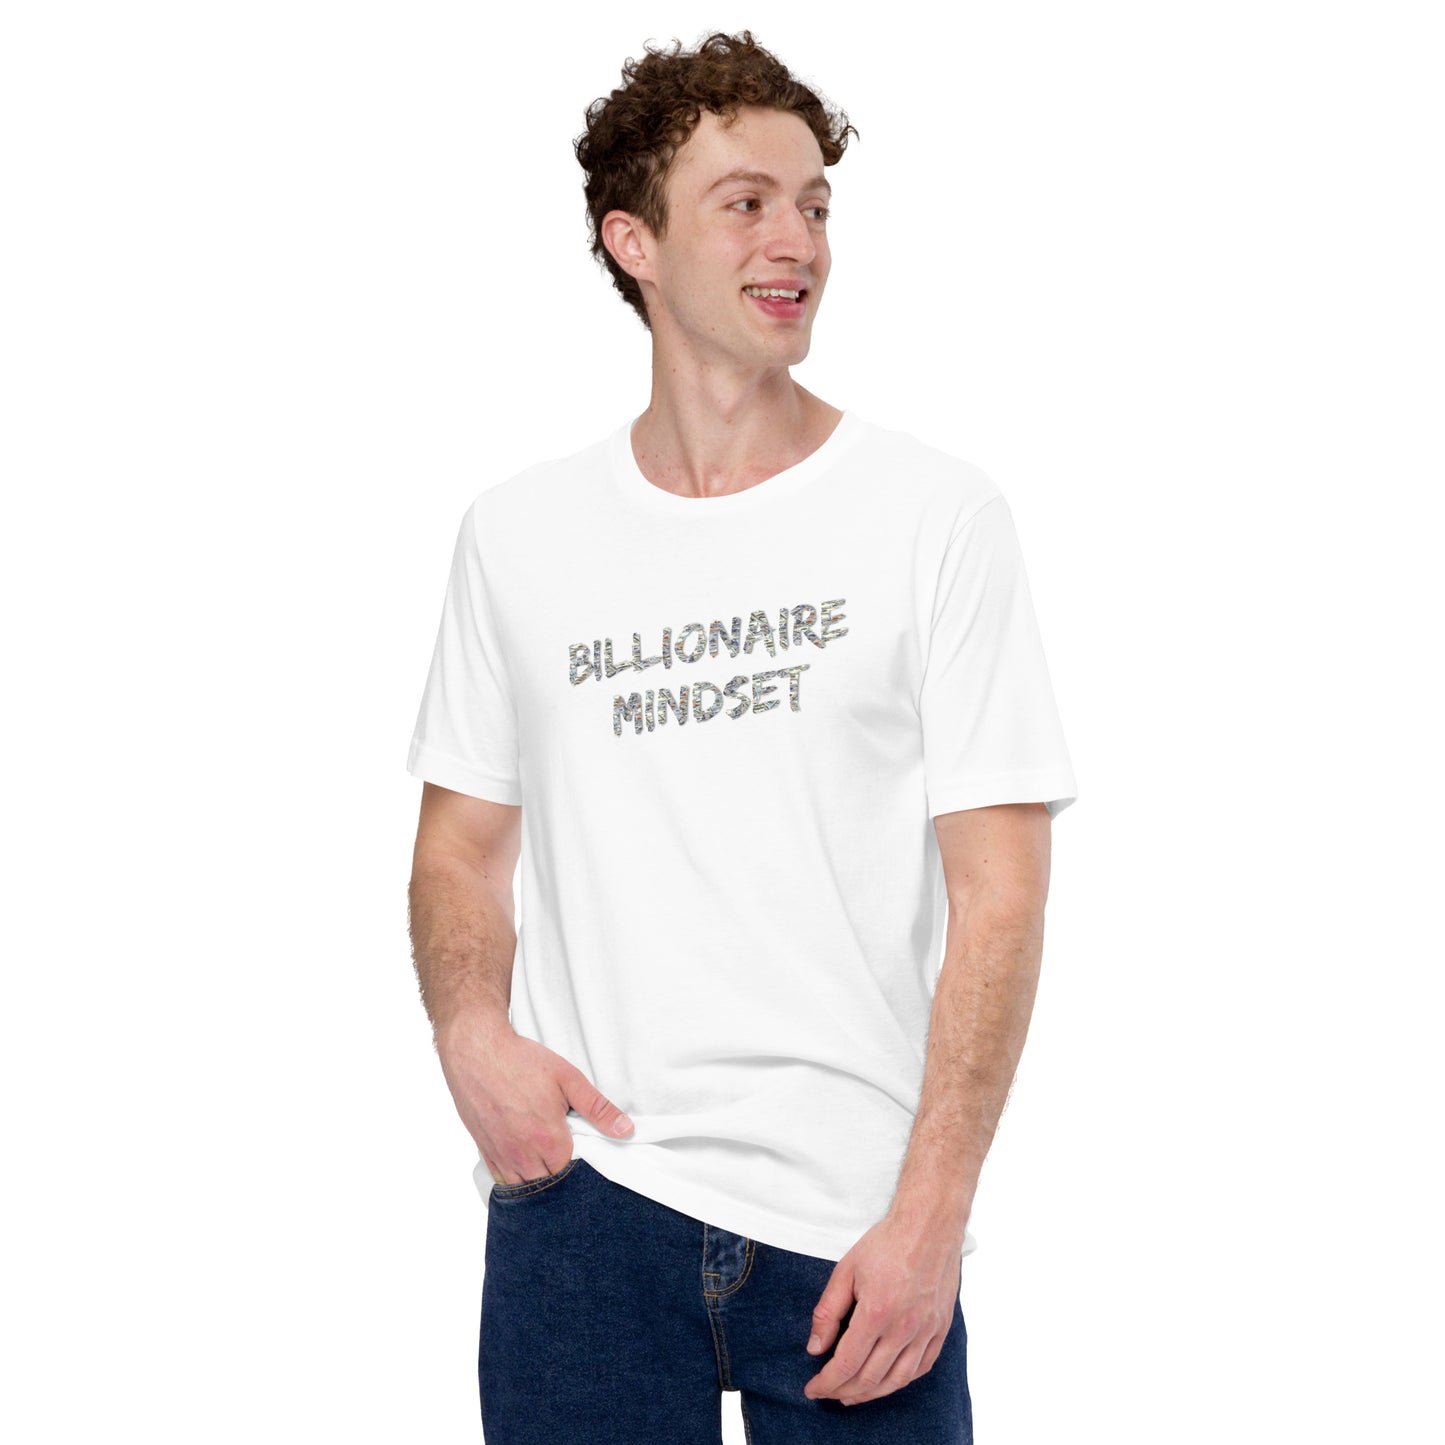 Billionaire Mindset - T- Shirt - Money Background